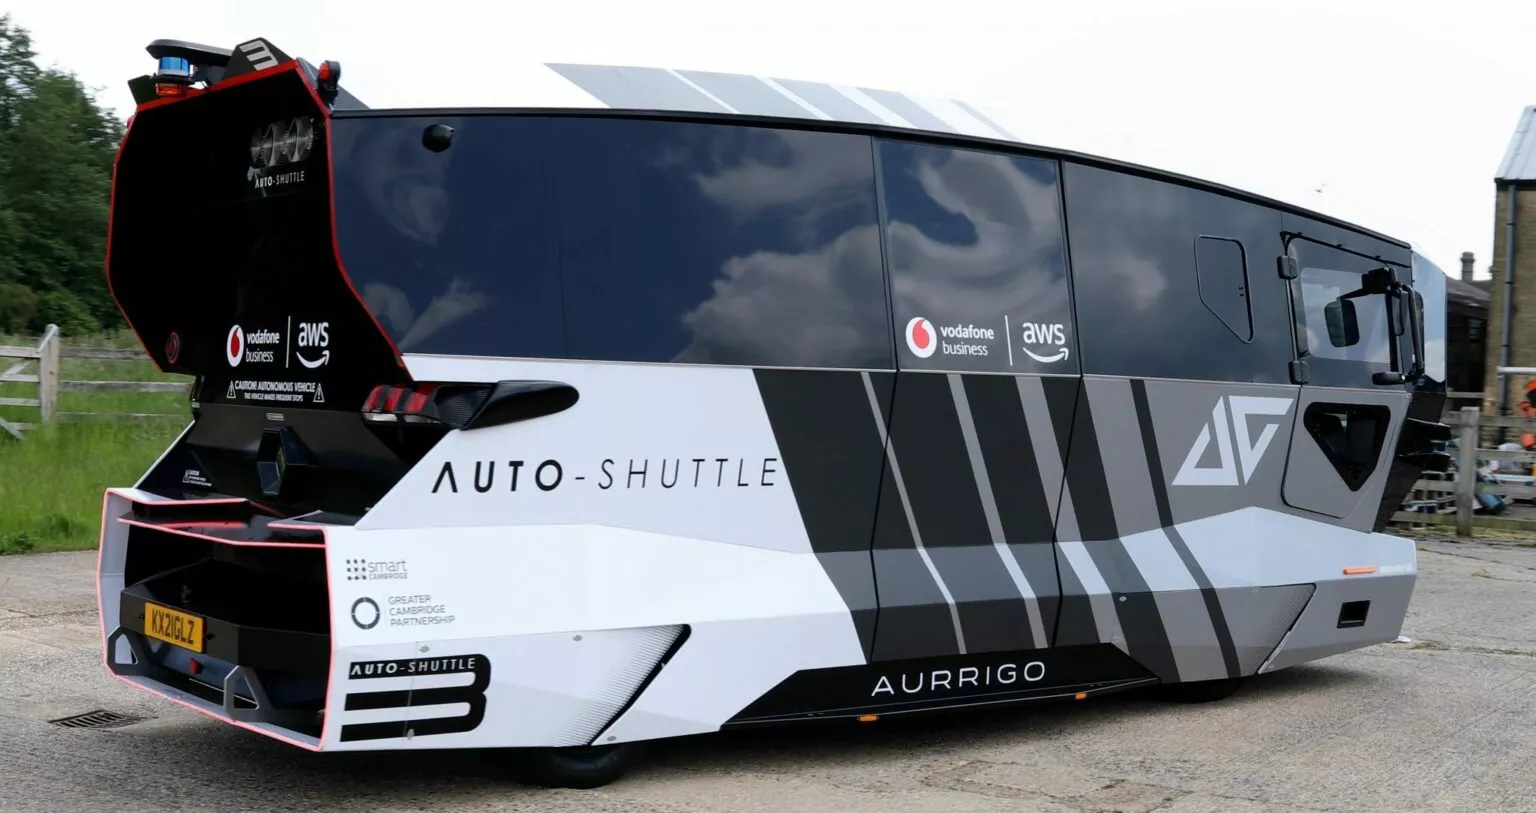 Aurrigo Shuttle Autobus Autonomo (8)